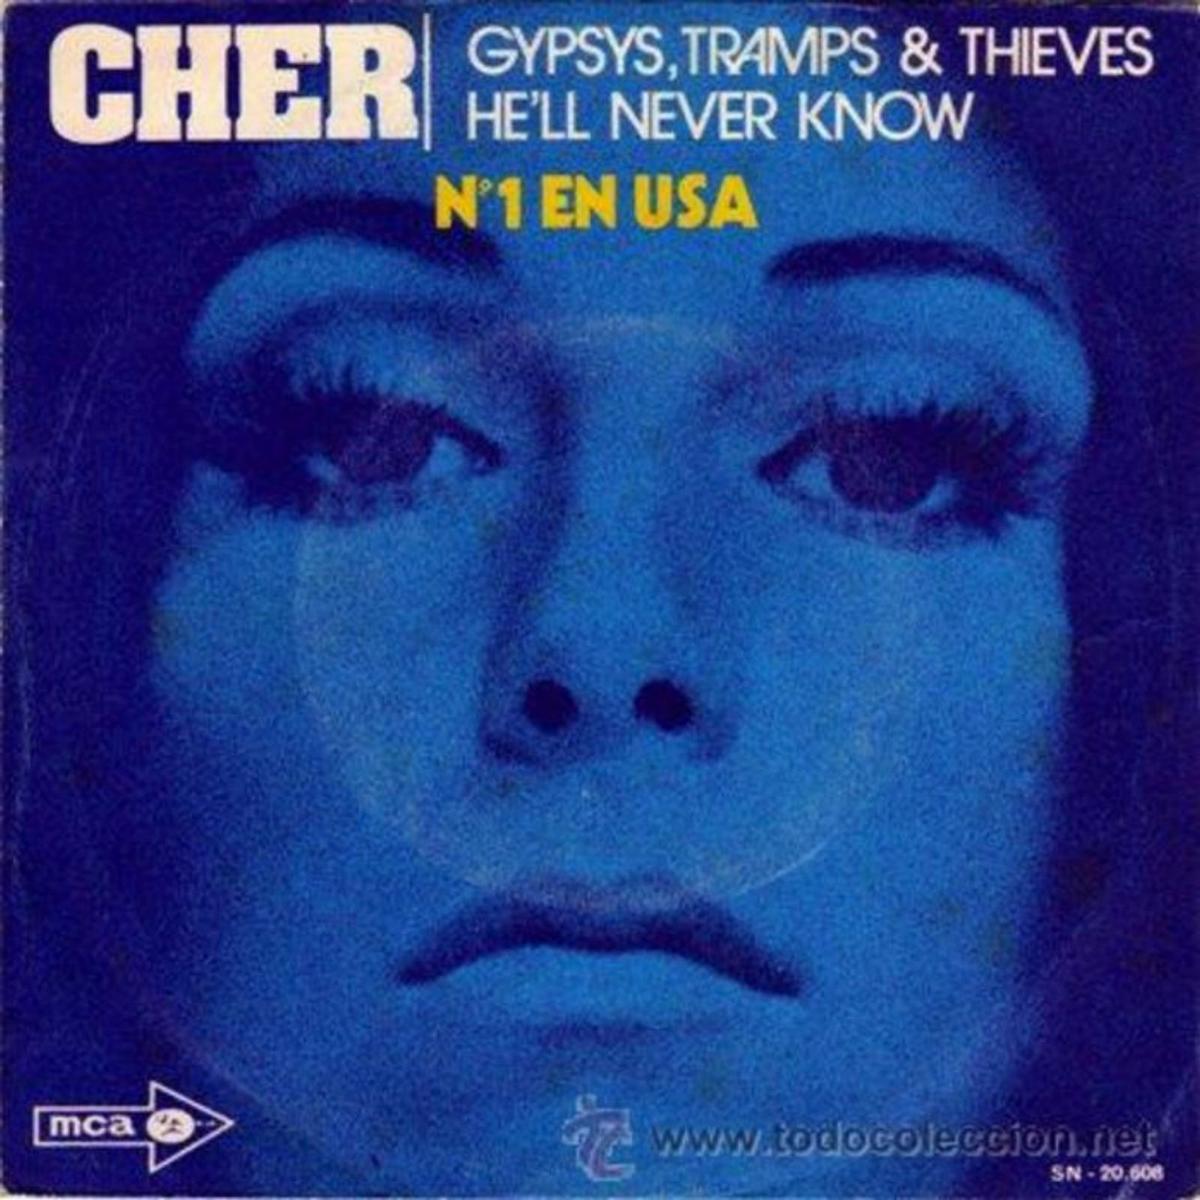 Gypsys, tramps &amp; thieves de Cher y London calling de The Clash.